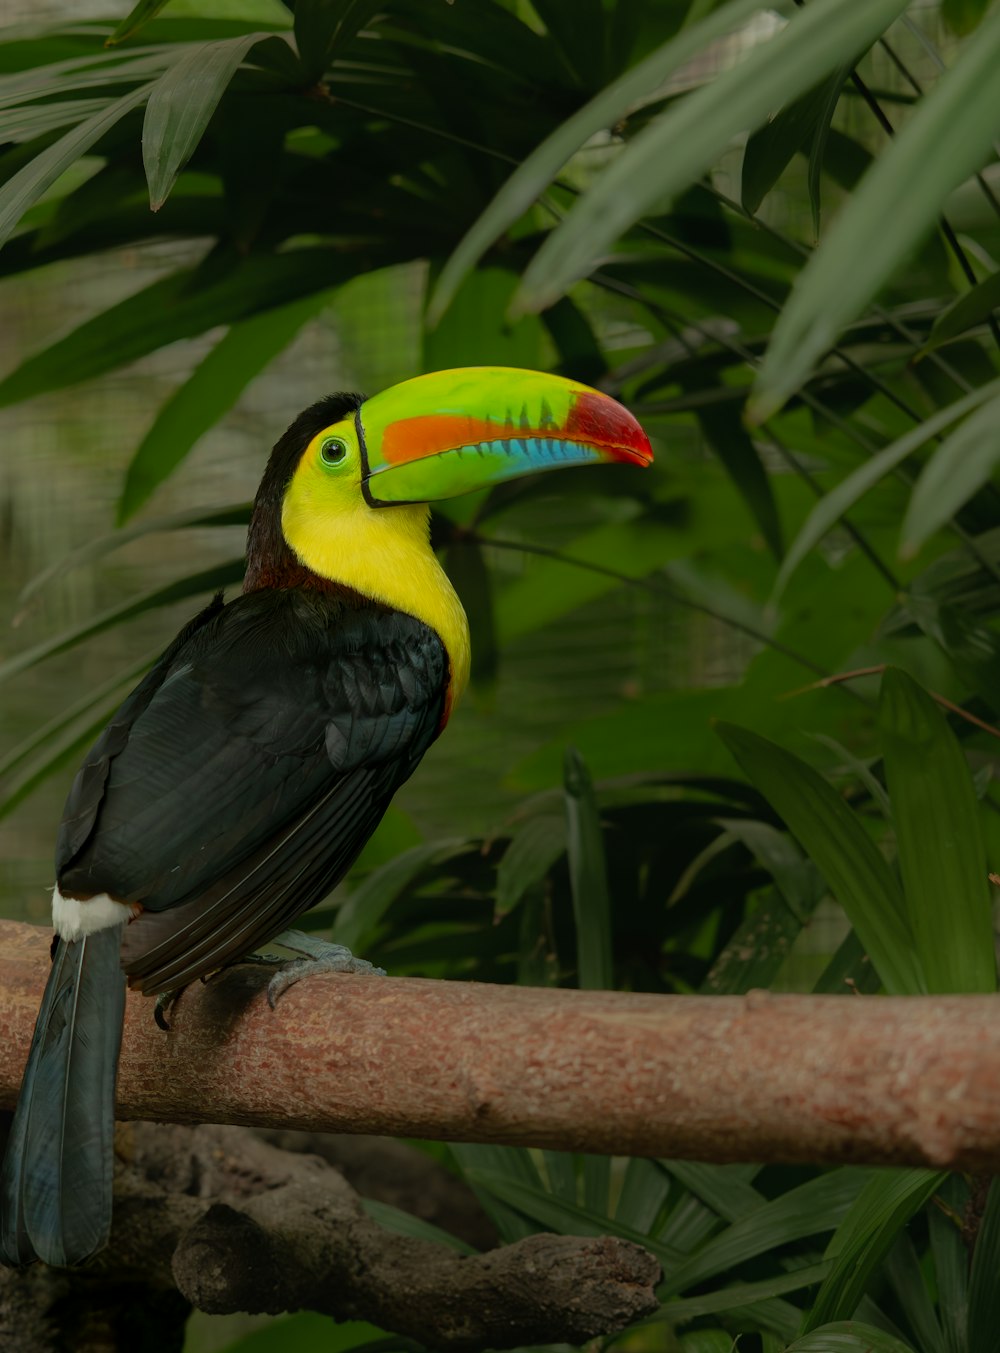 Un tucano colorato seduto su un ramo in una giungla